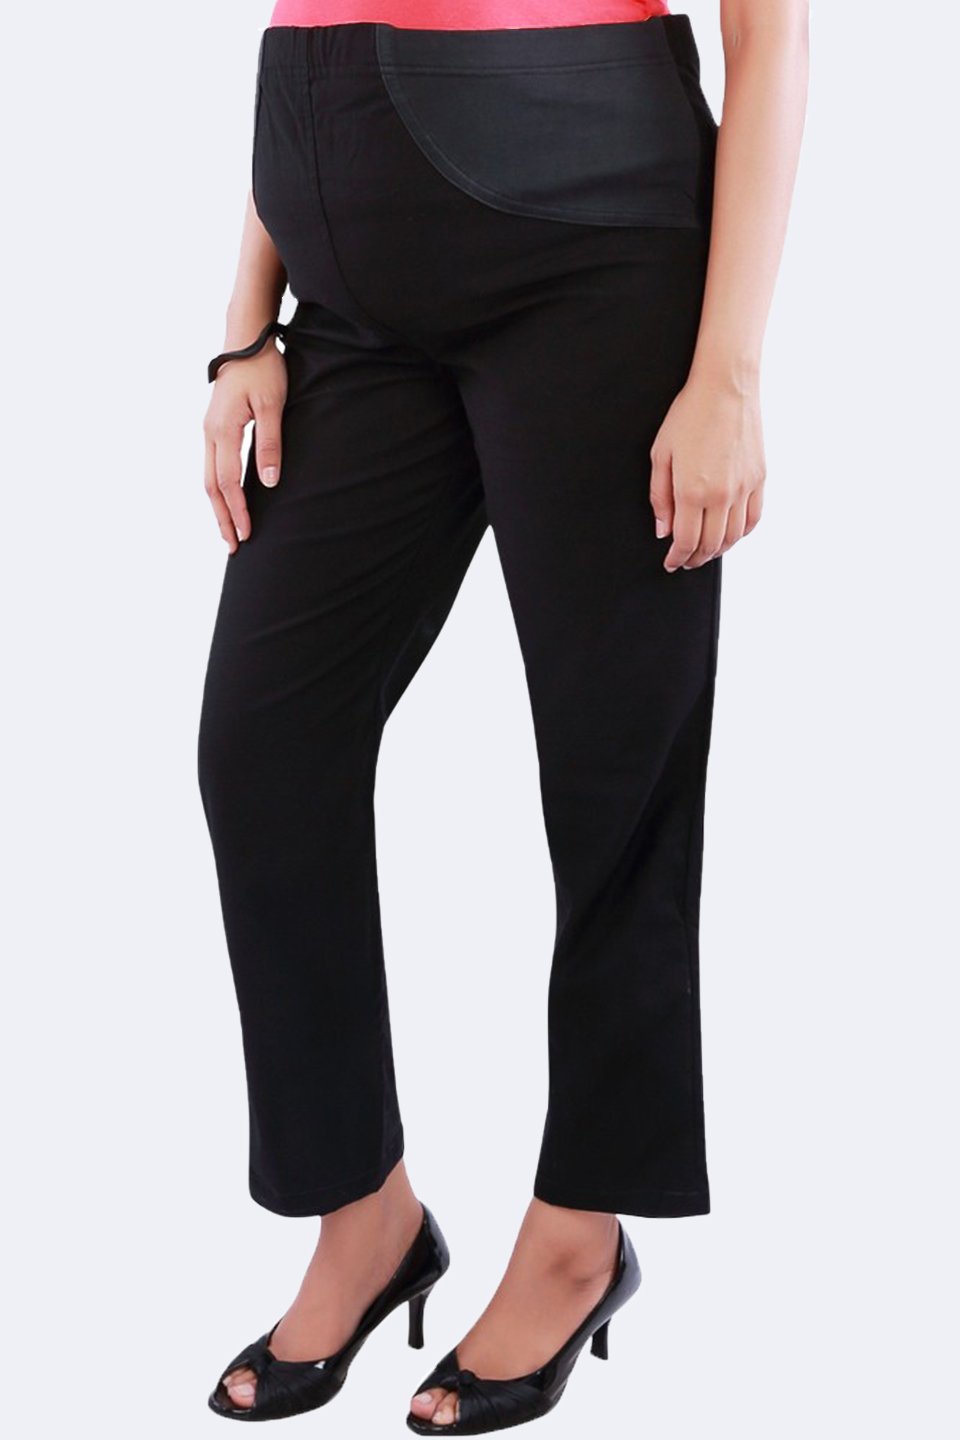 Buy Easy Feed Womens Regular Fit Black Pants M at Amazonin